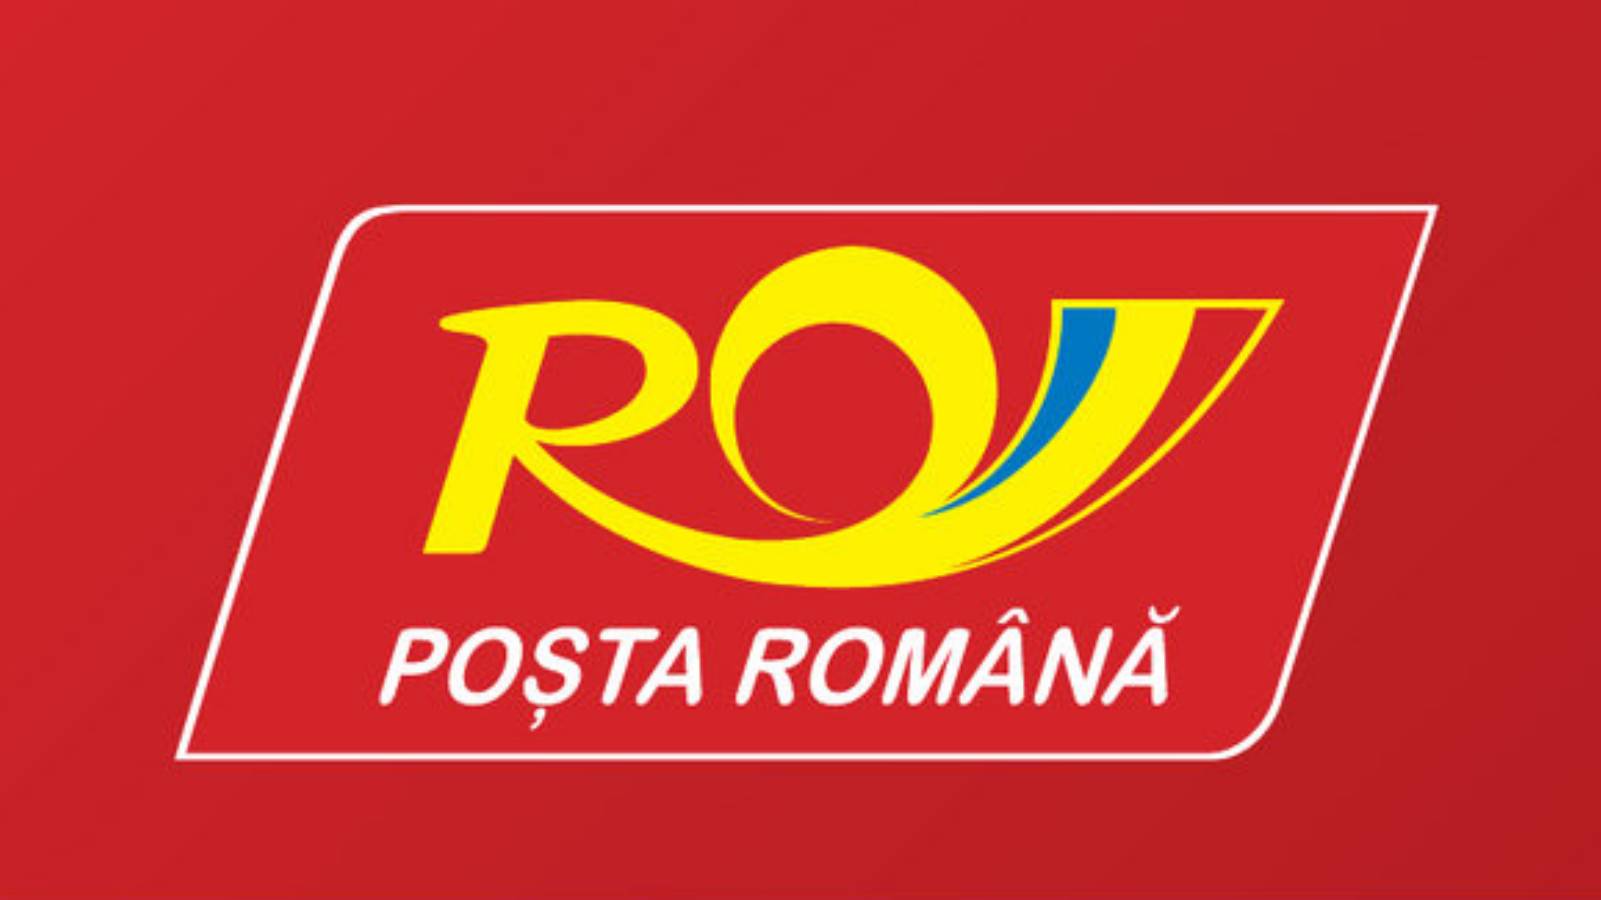 Roemeense postvergunningskosten